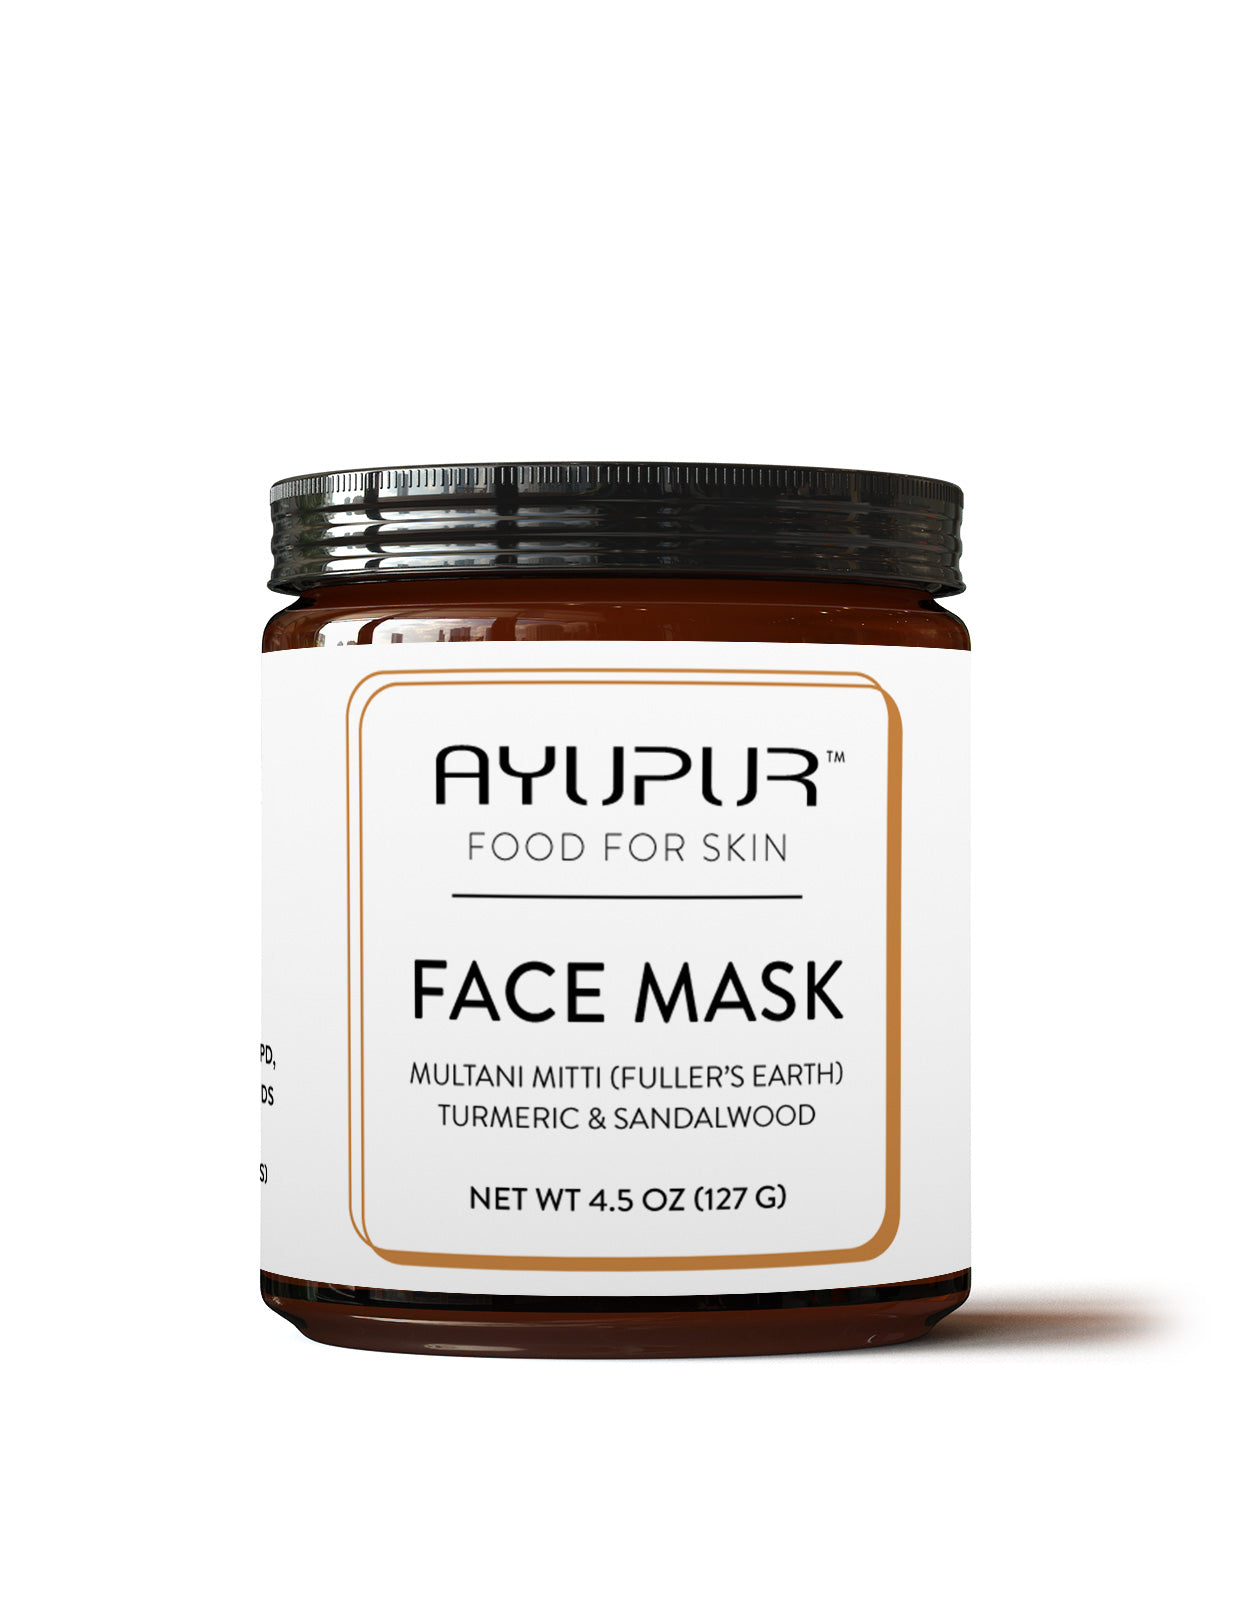 AYUPUR™ Face Mask with Multani Mitti (Fuller's Earth)  - 4.5 oz